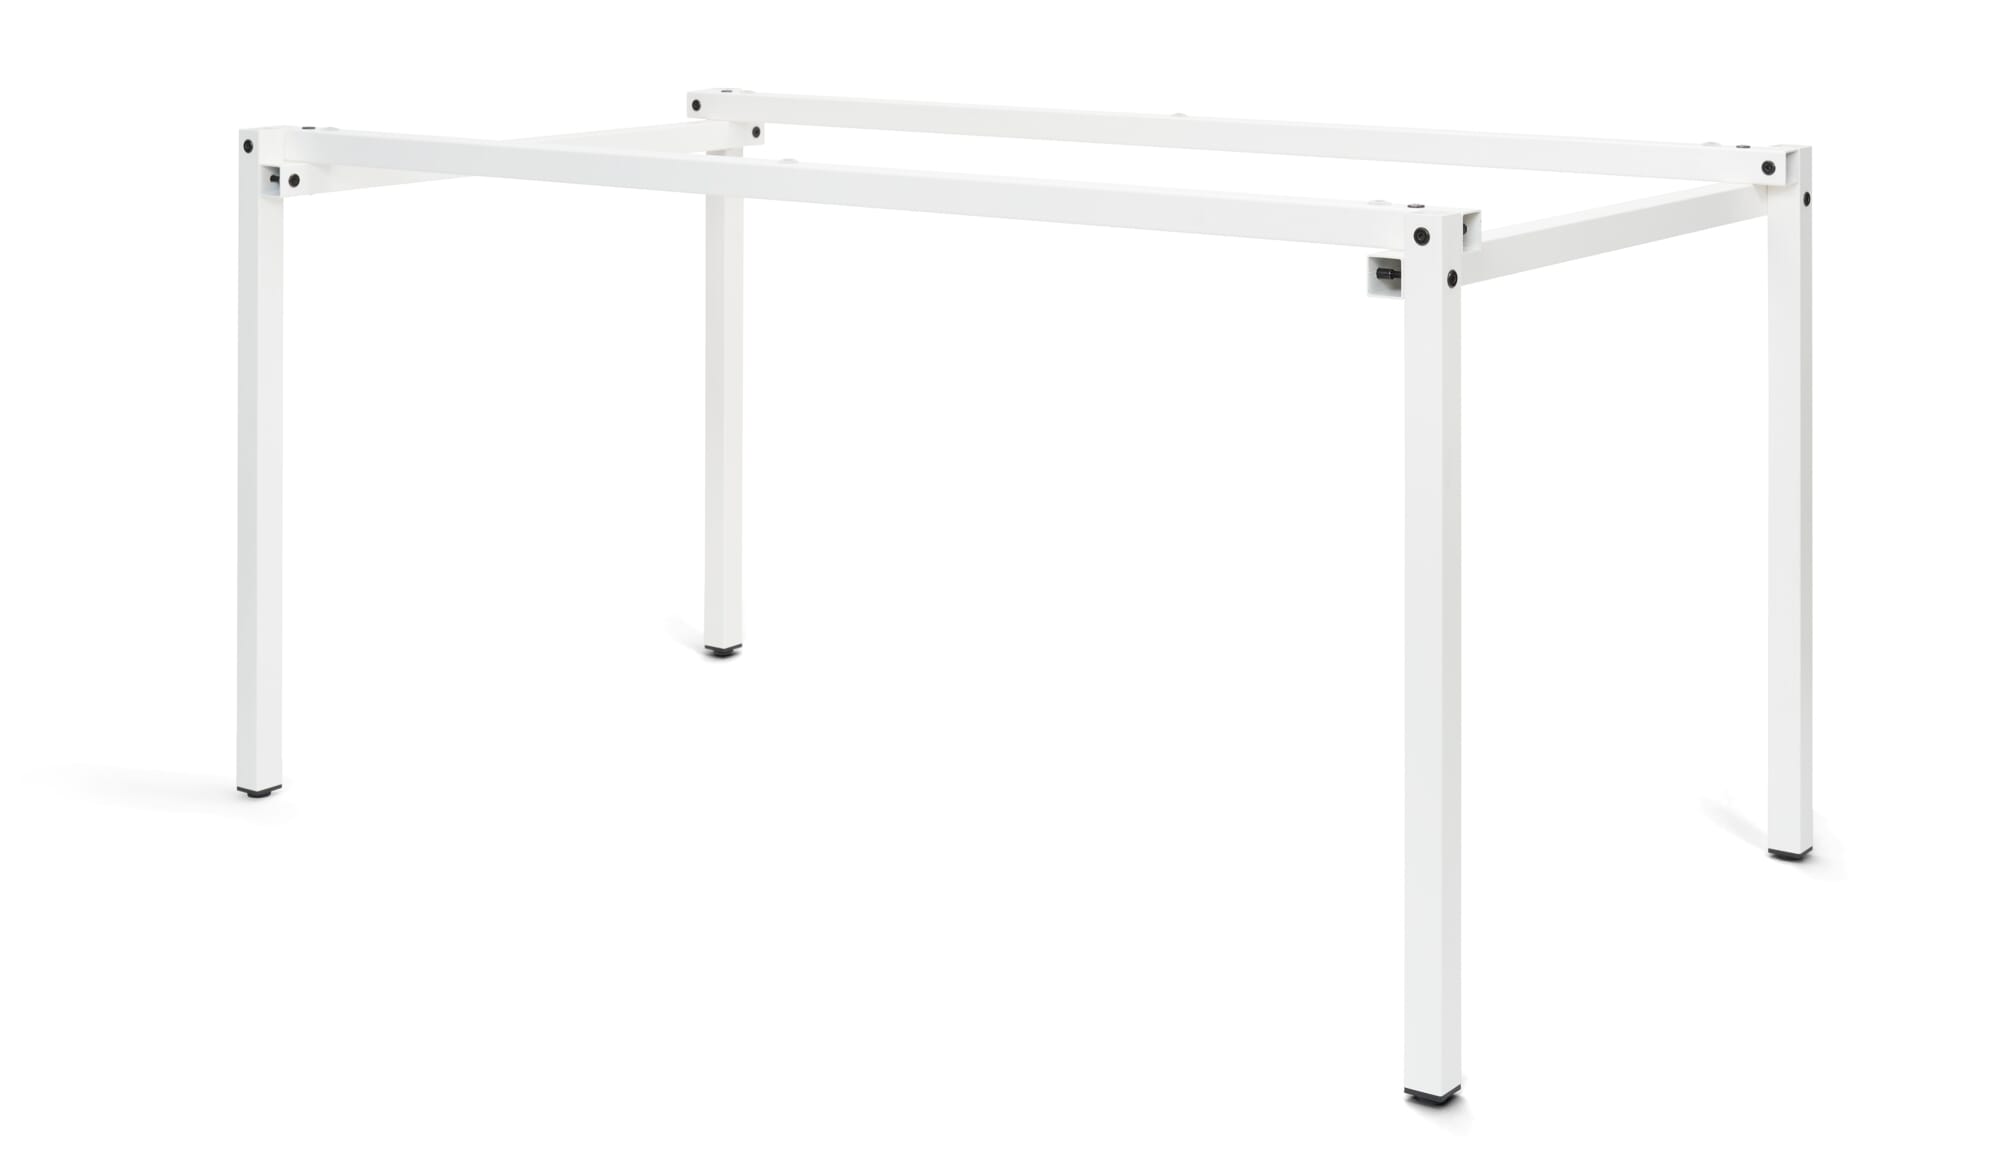 noodsituatie Hechting gehandicapt Table Frame ERIK, Pure White RAL 9010 | Manufactum